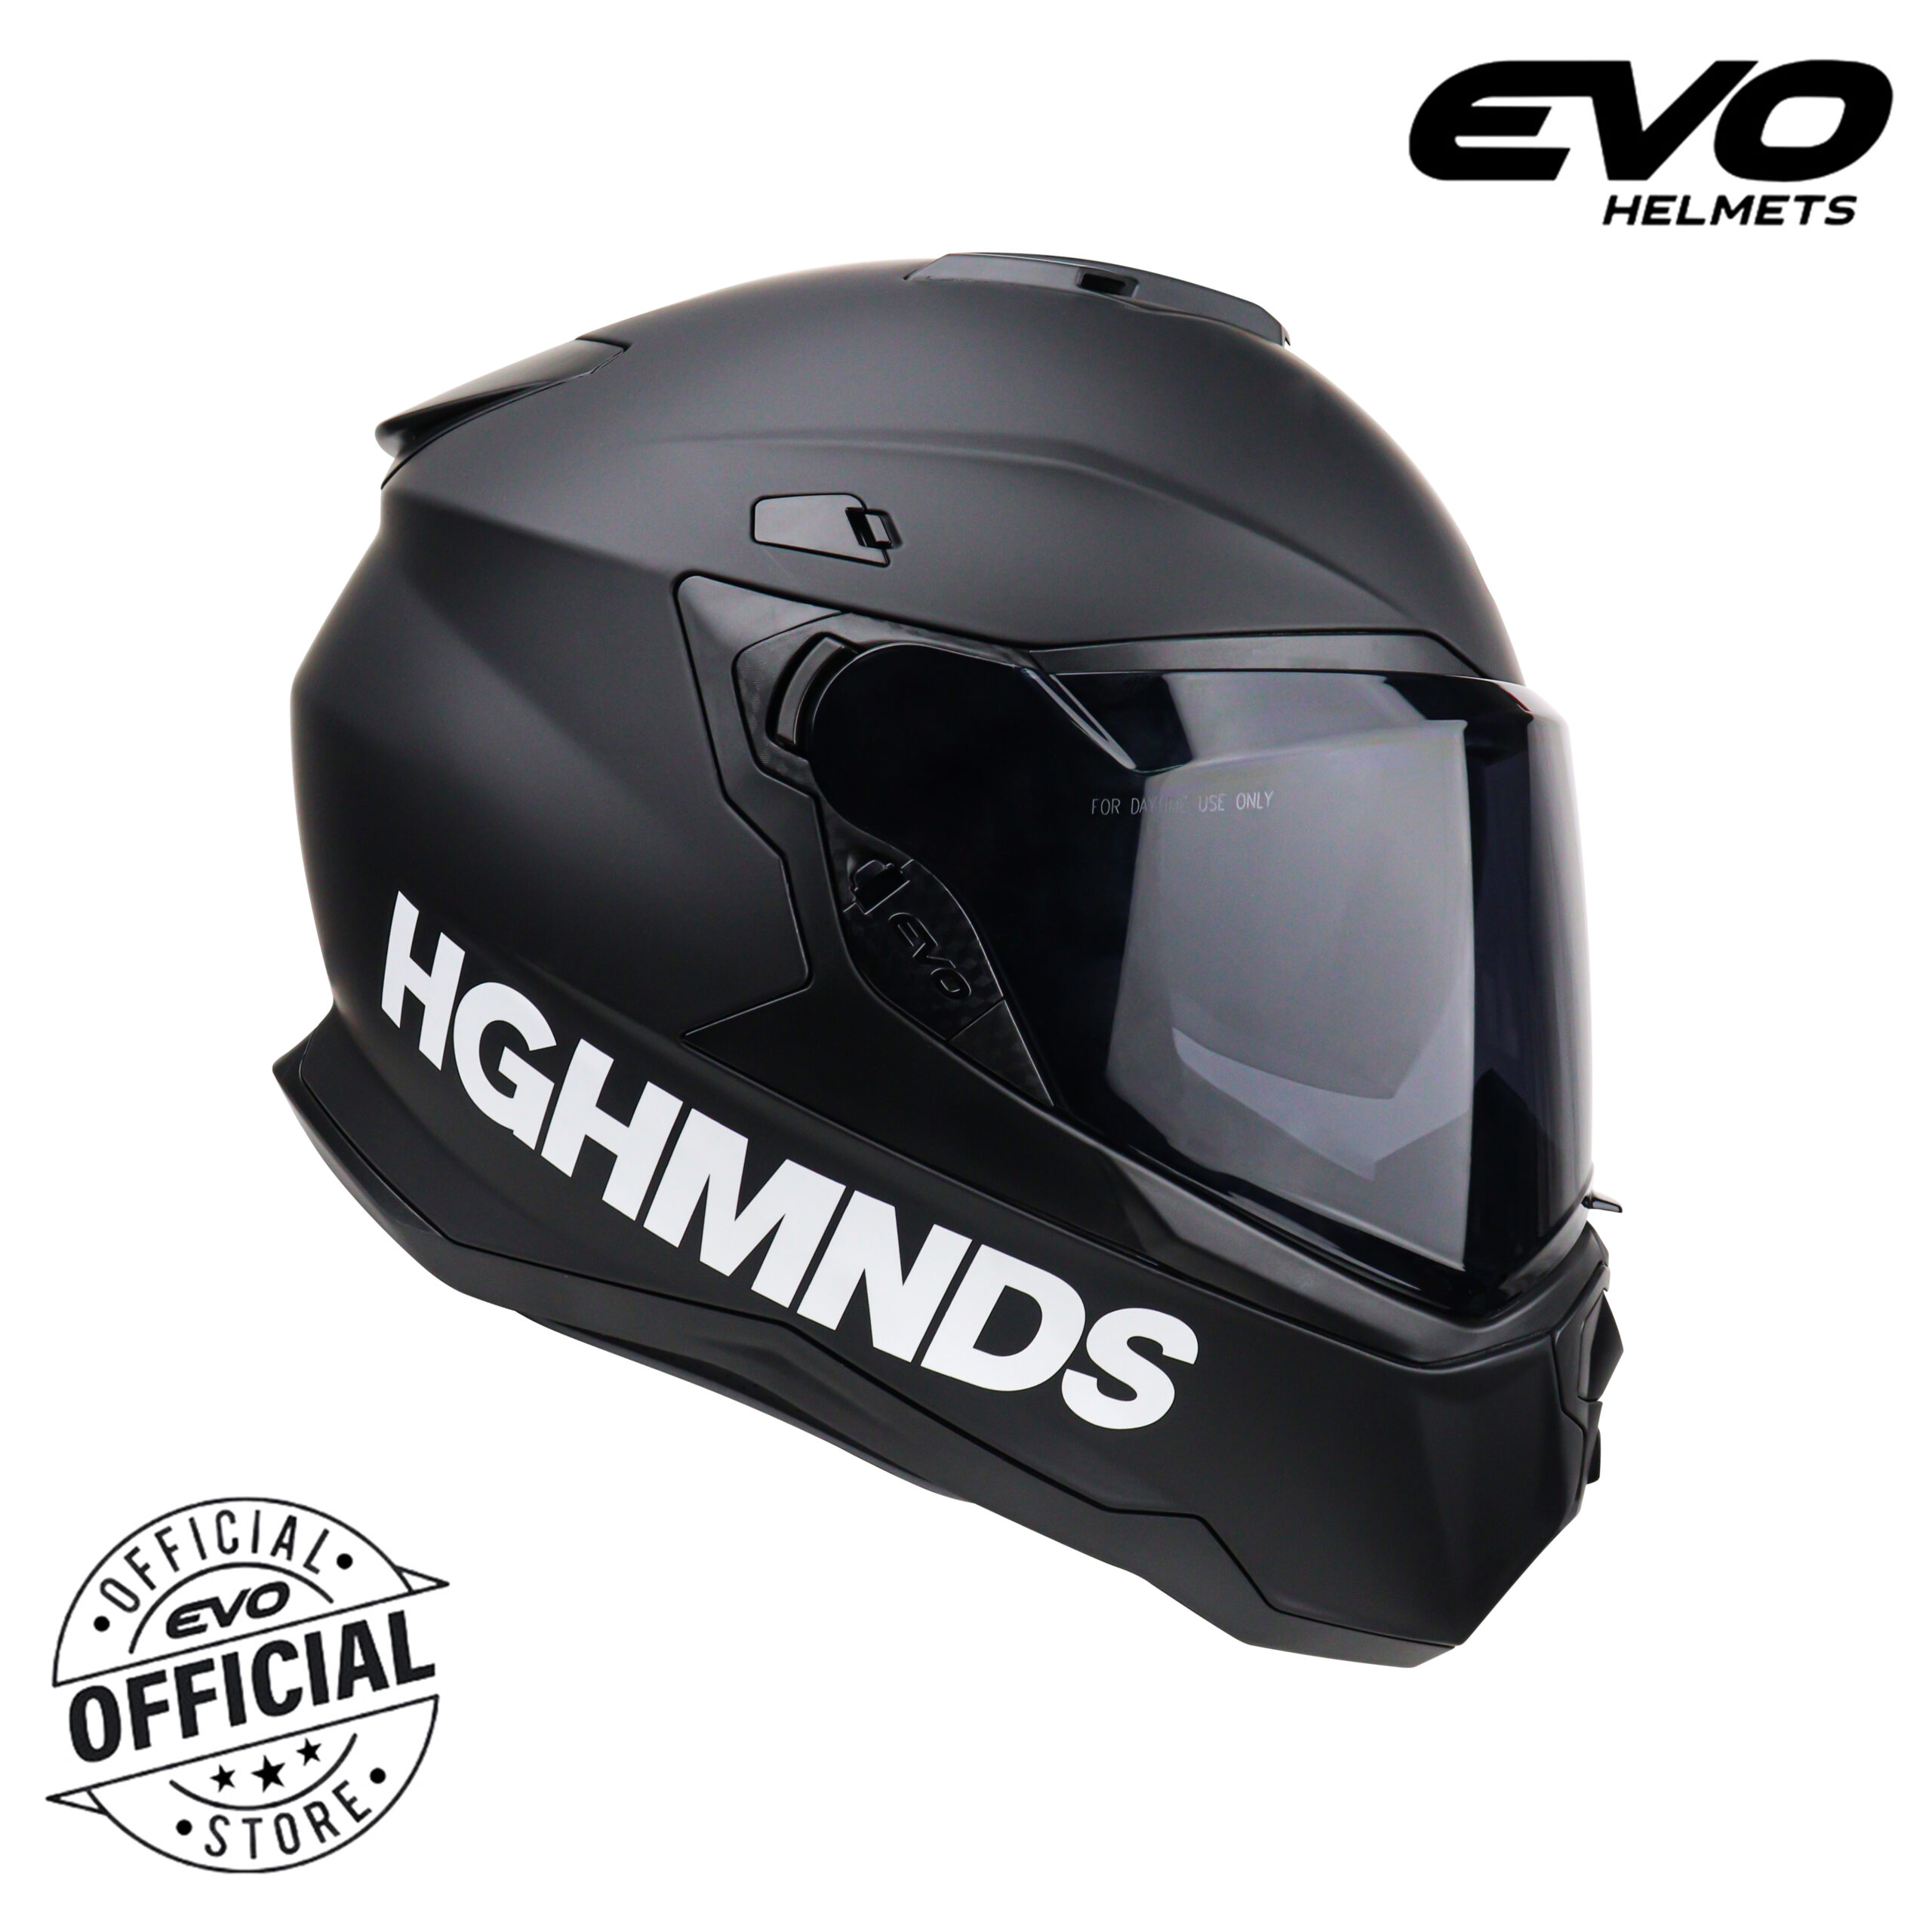 DX-7 HGHMNDS - Evo Helmets